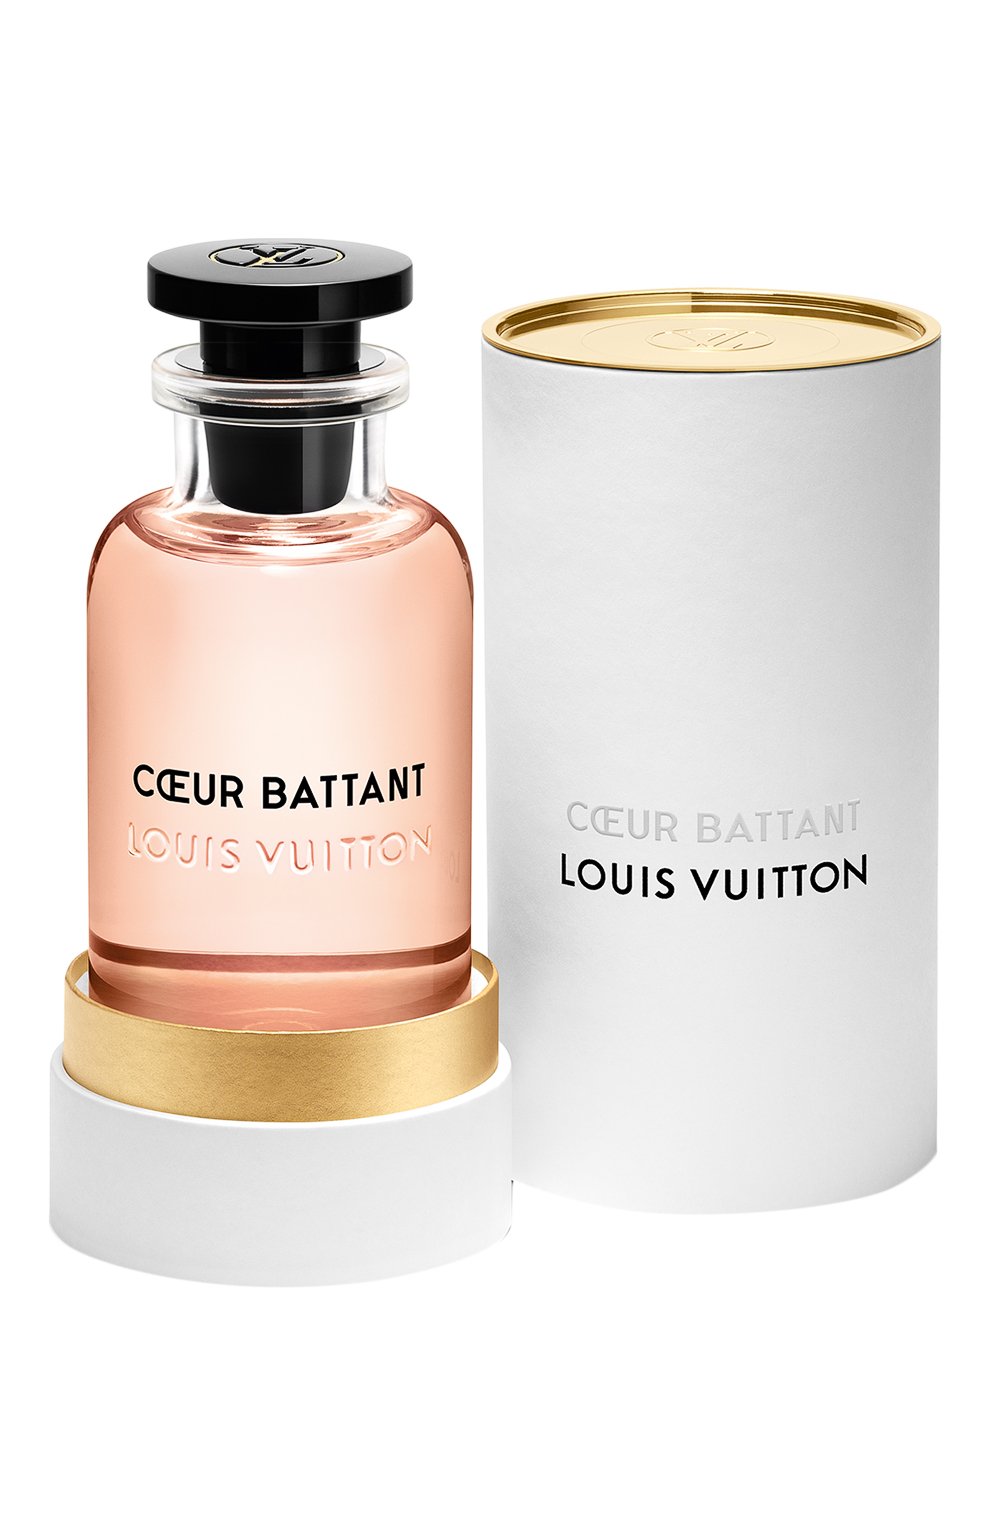 Discovering Louis Vuitton Cœur Battant in Grasse - Glam & Glitter